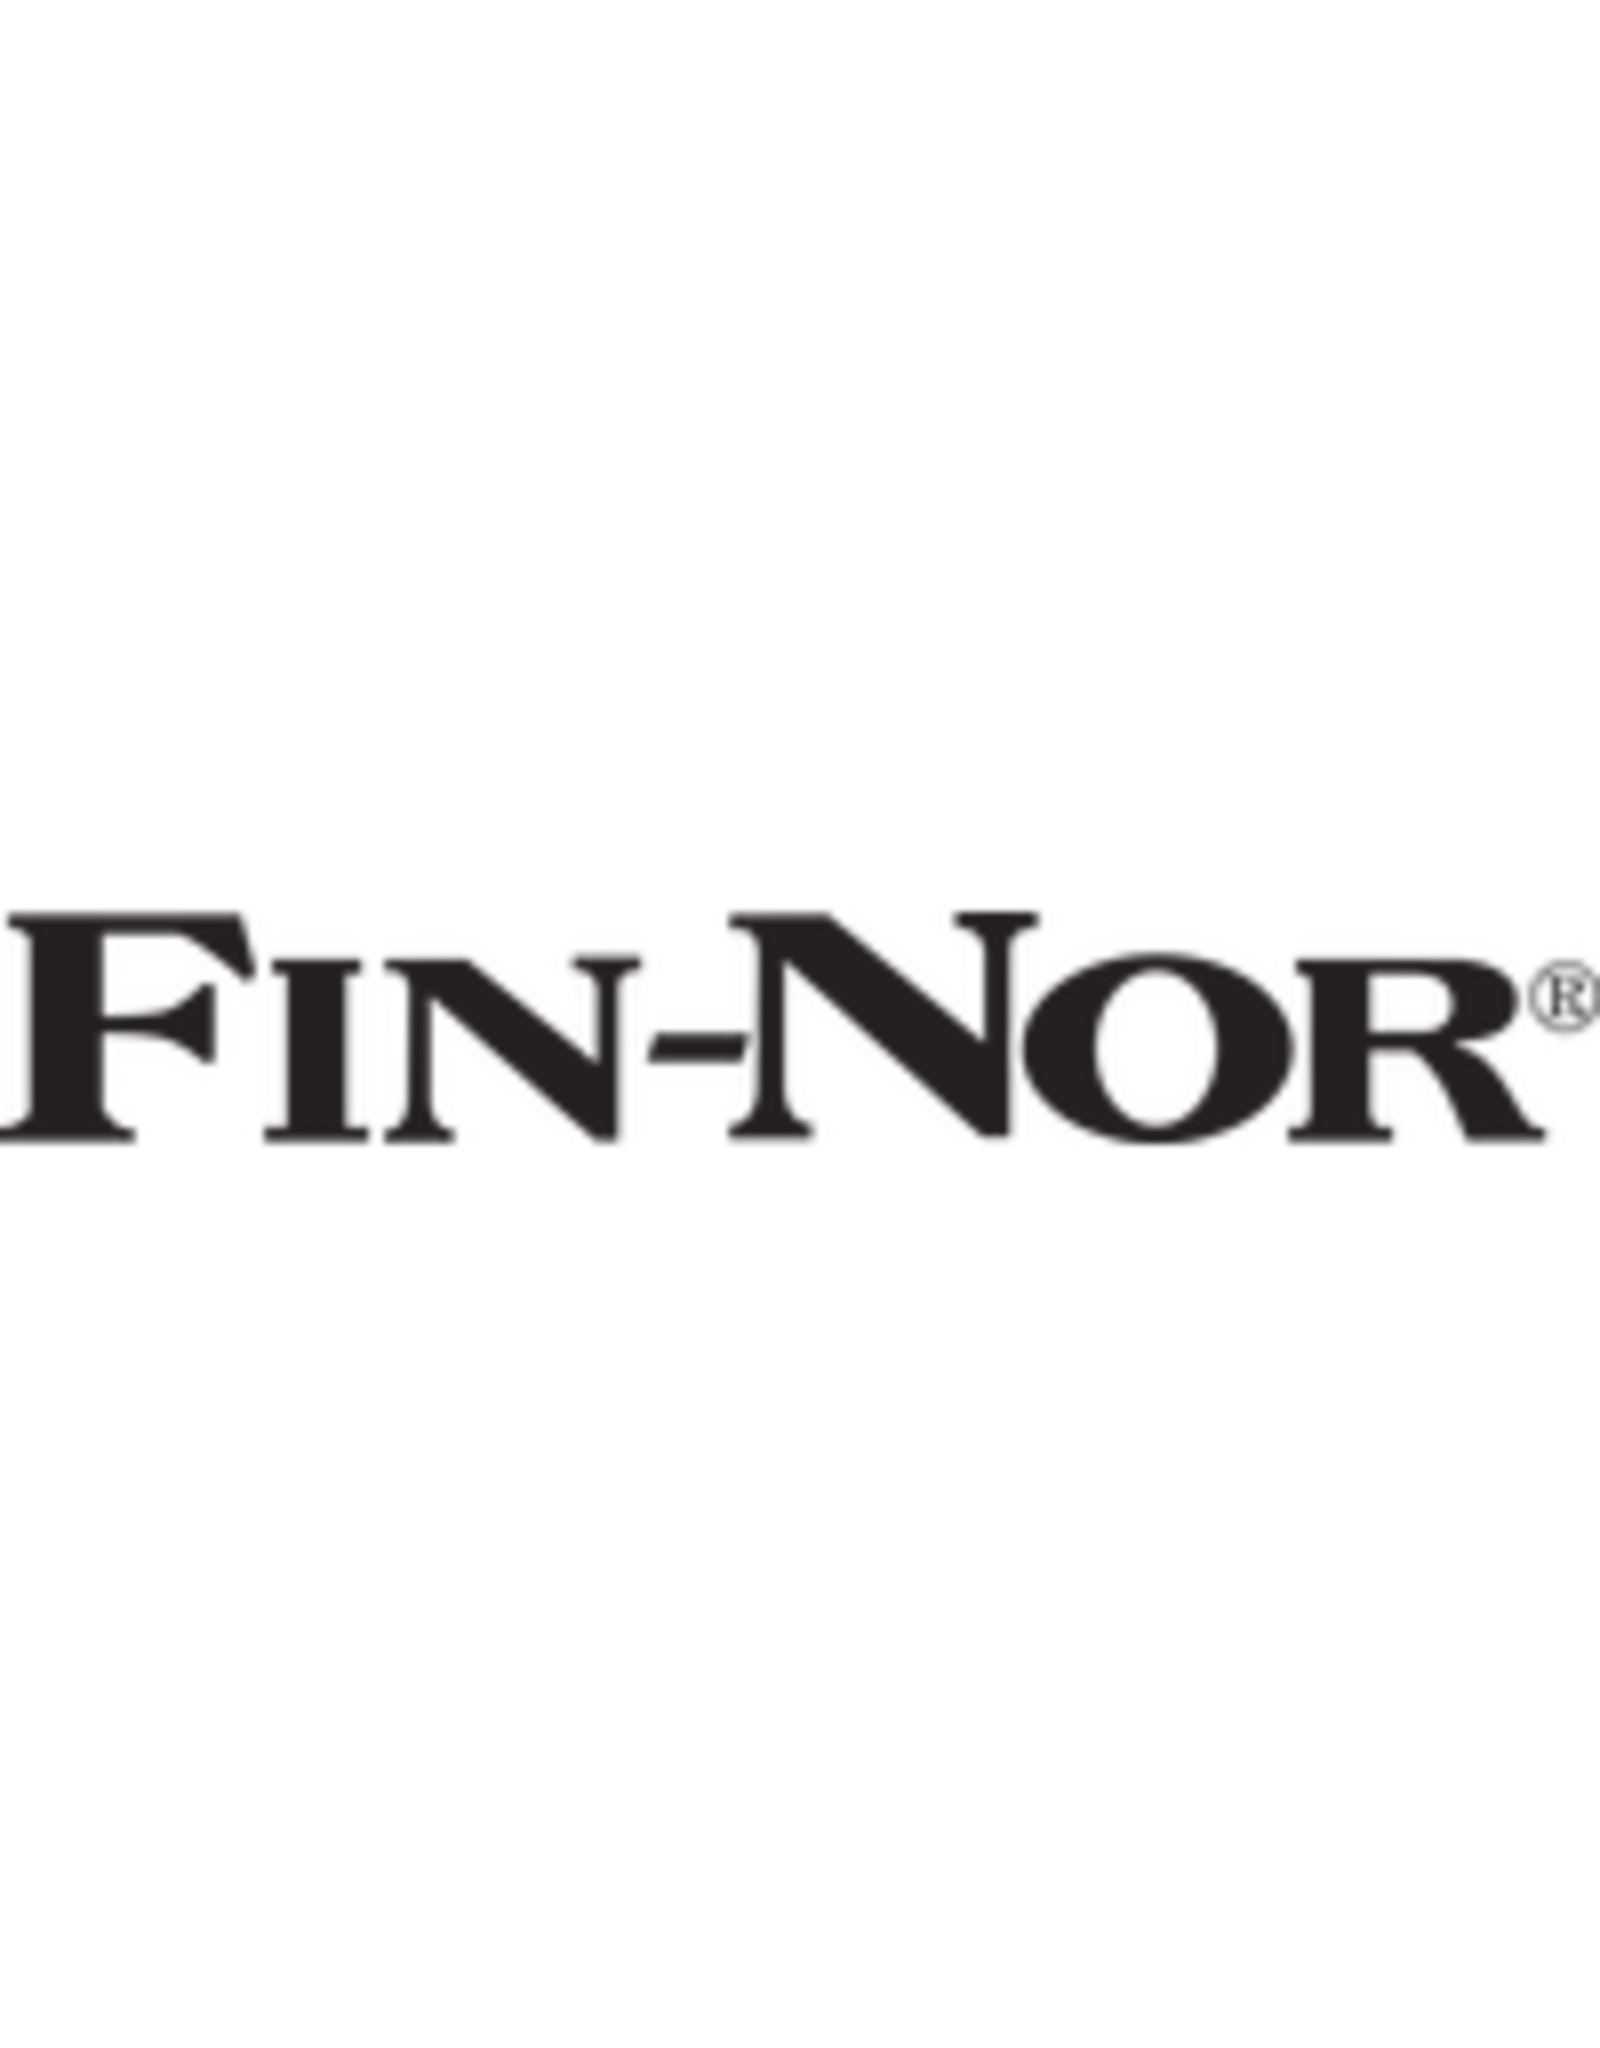 Fin-Nor LF101-01 O RING